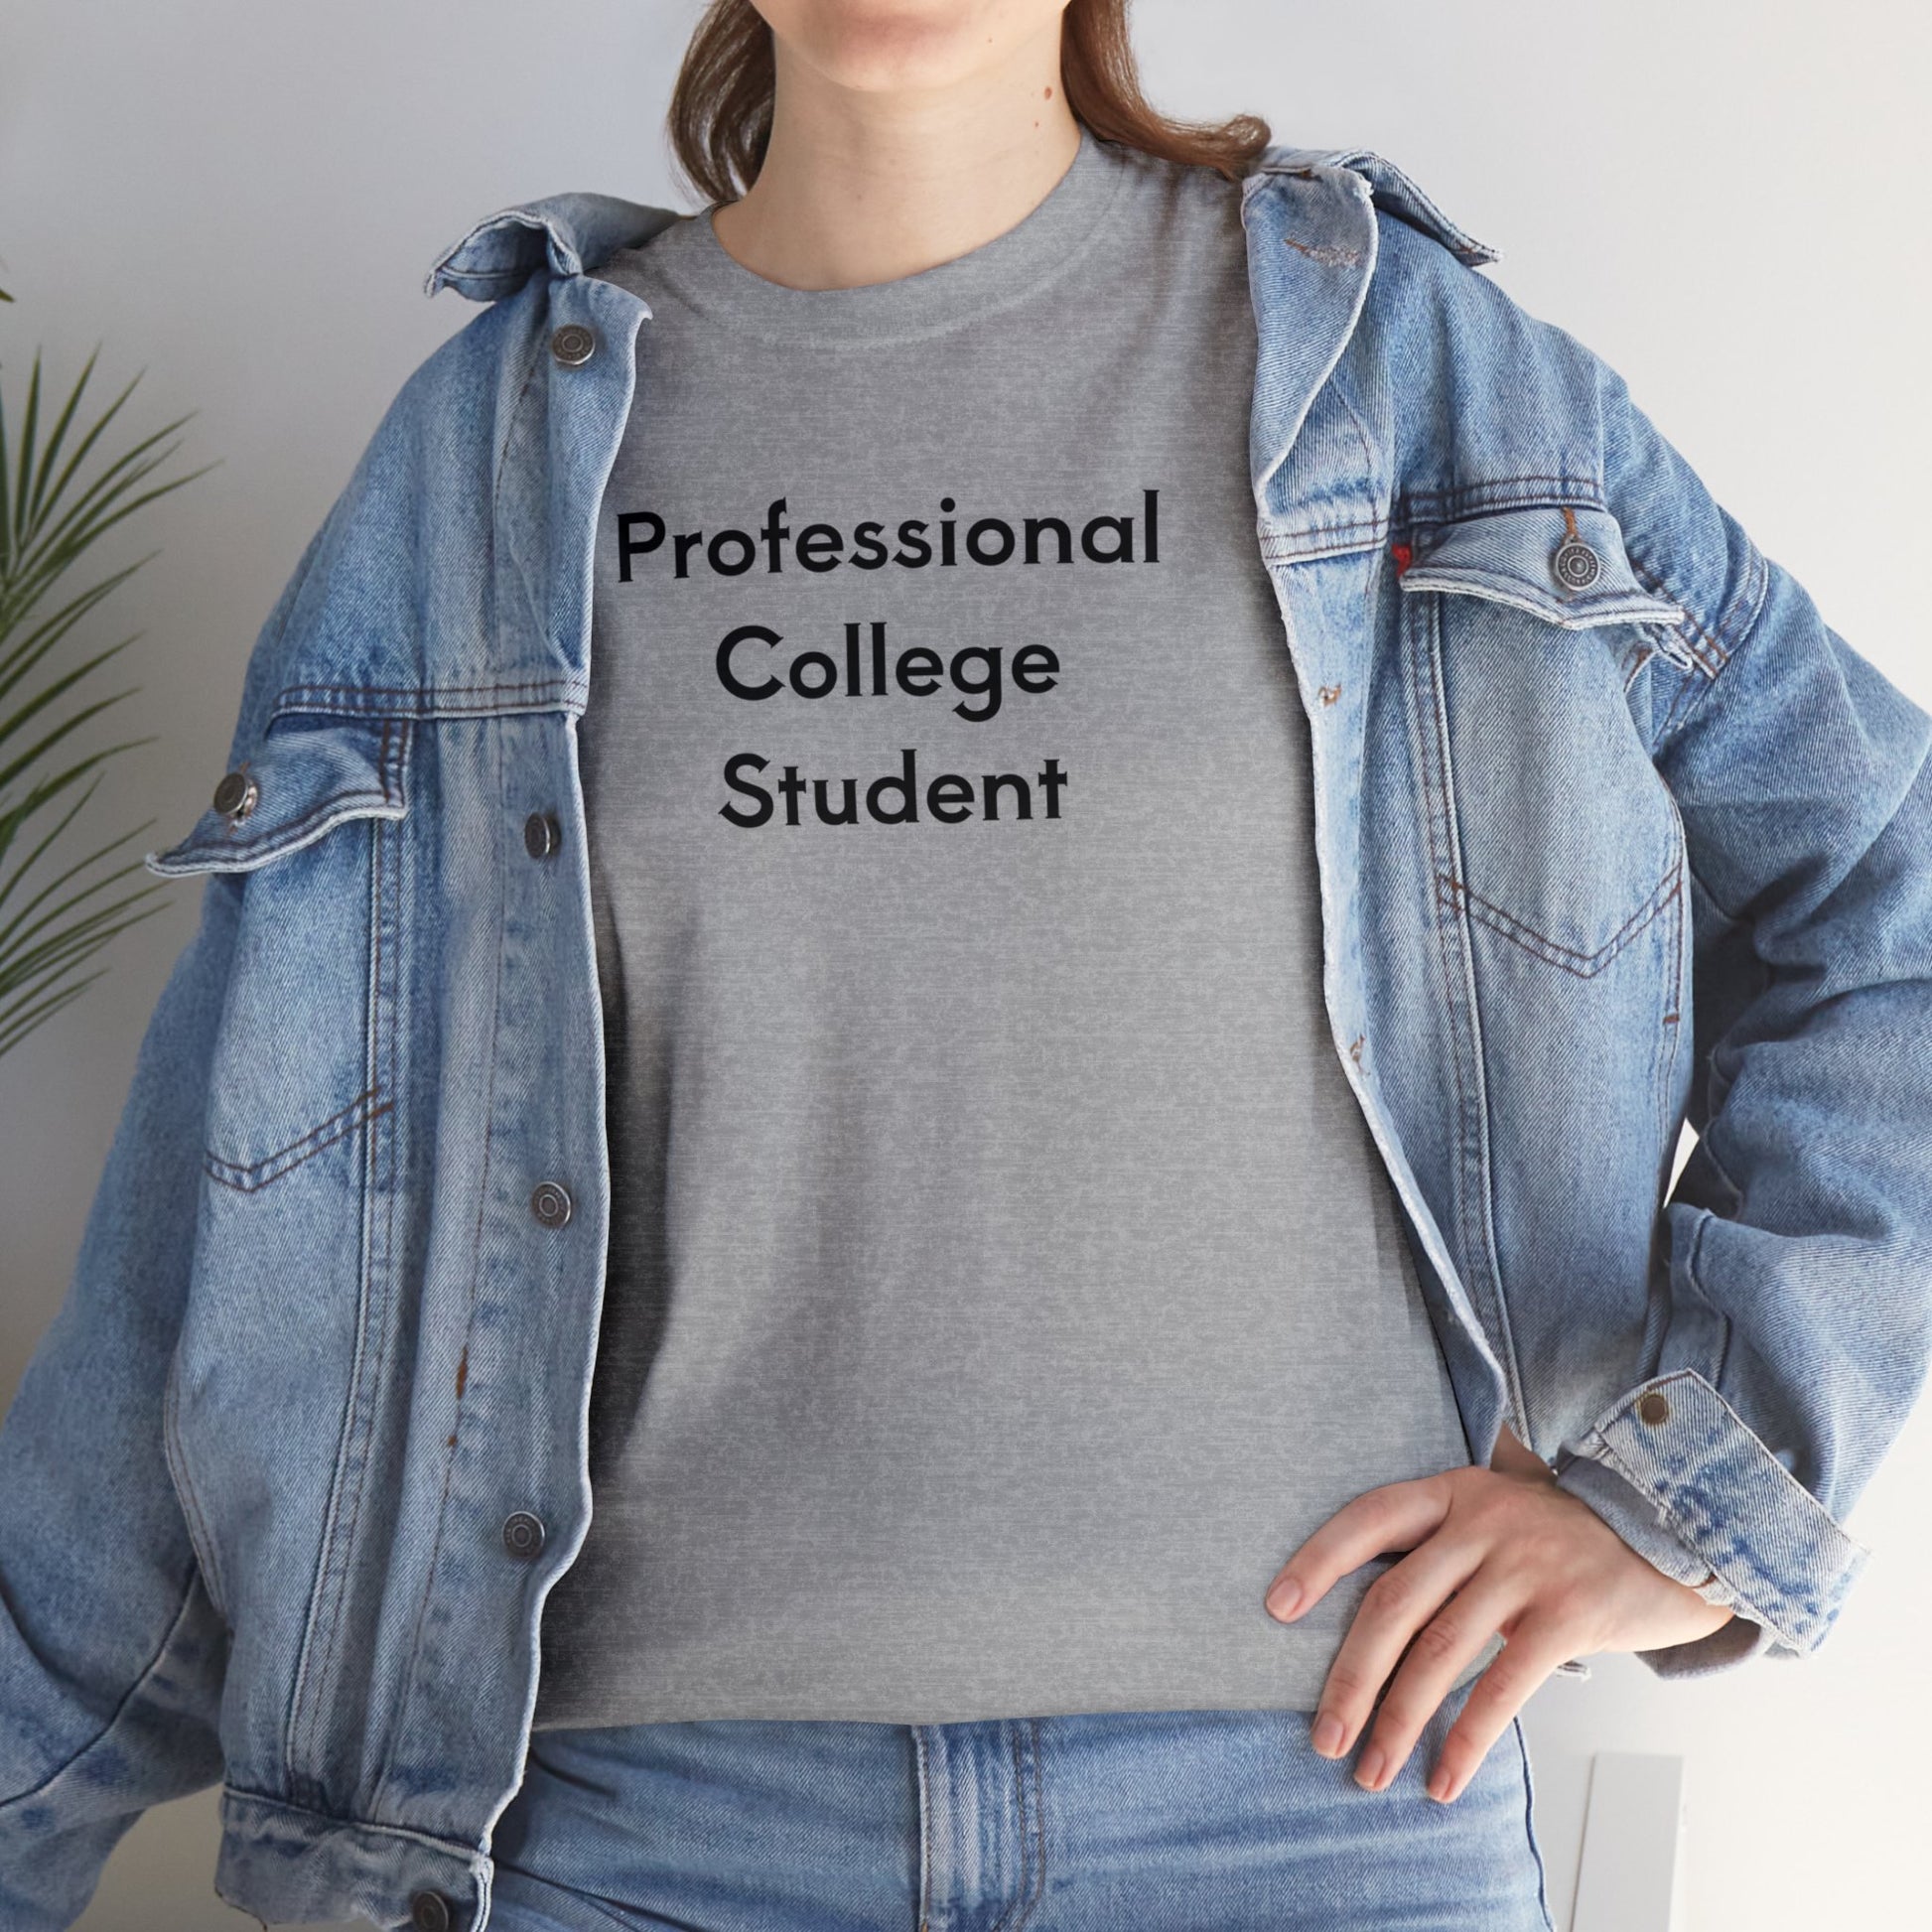 "Pro-College Student" Tee